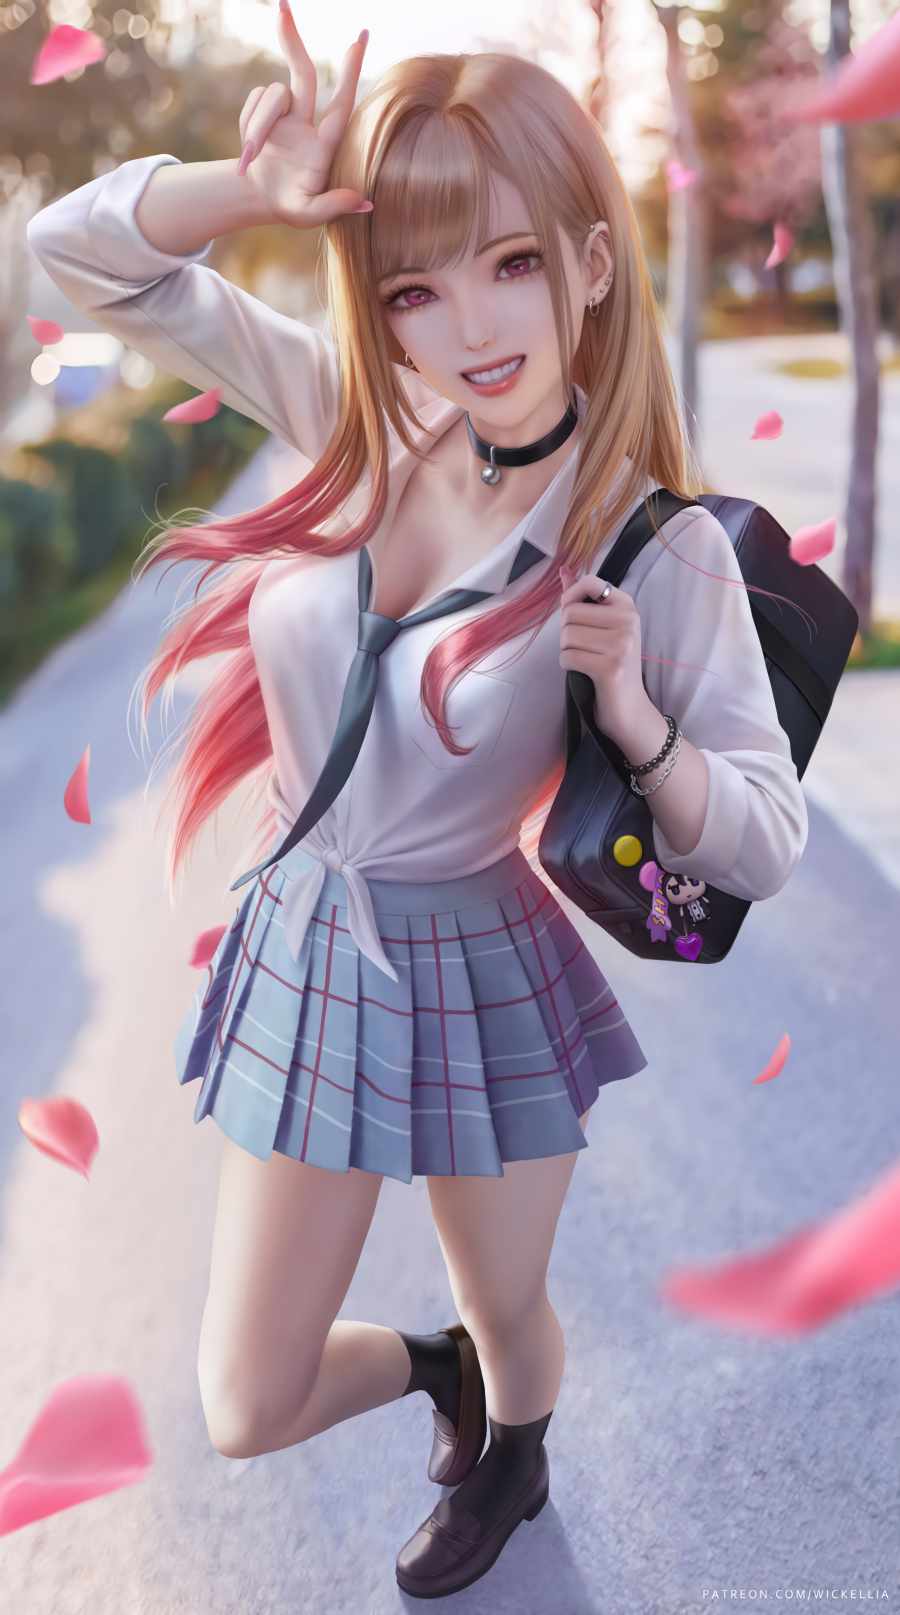 Anime School Girl iPhone Wallpaper